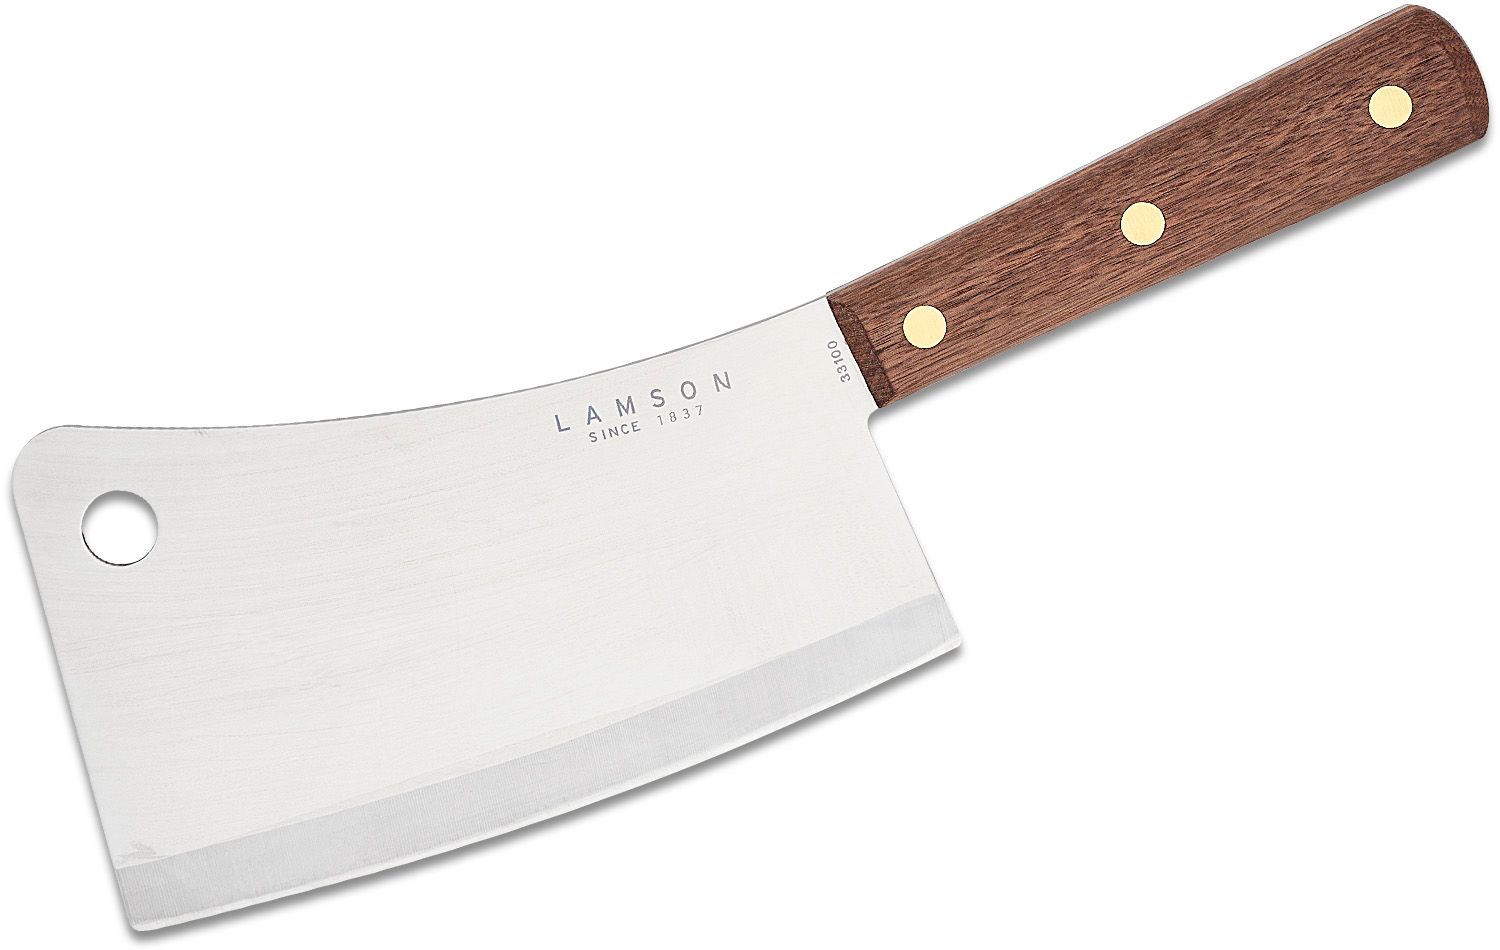 https://pics.knifecenter.com/knifecenter/lamson-kitchen-cutlery/images/LA33100_1.jpg